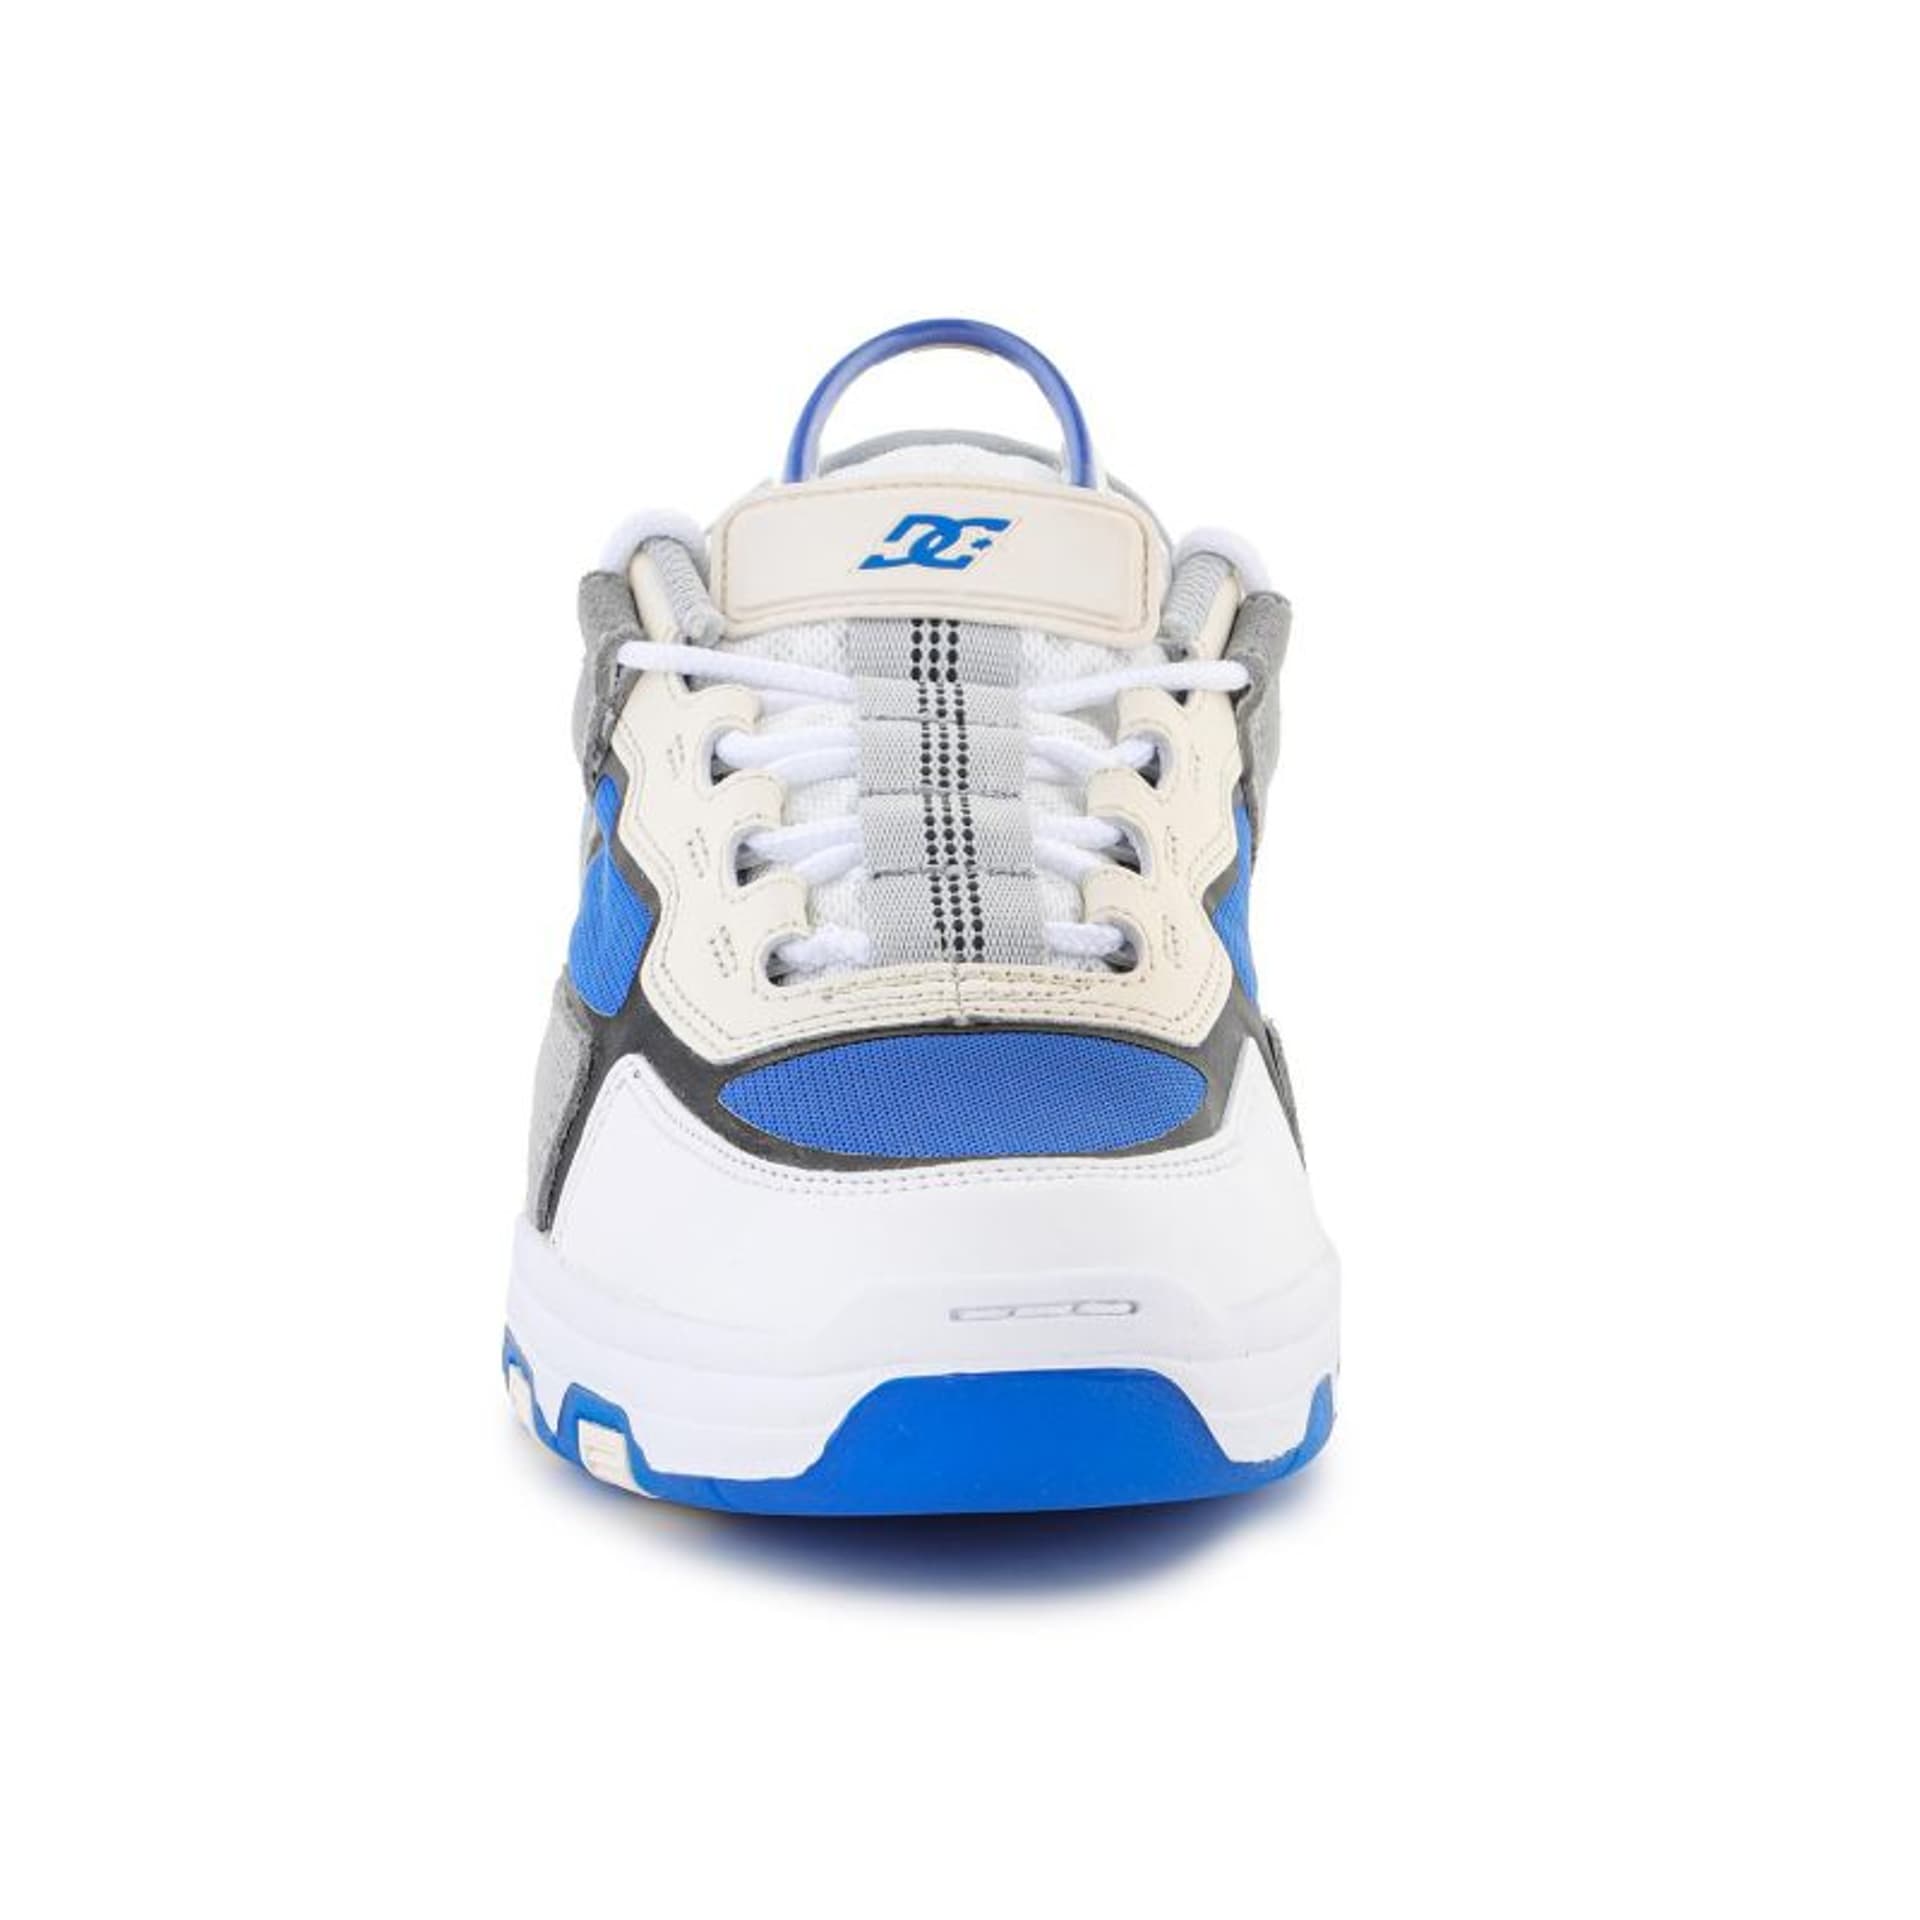 Buty DC Shoes Shanahan Metric Skate Shoes M (kolor Biały. Niebieski. Szary/Srebrny, rozmiar EU 44)